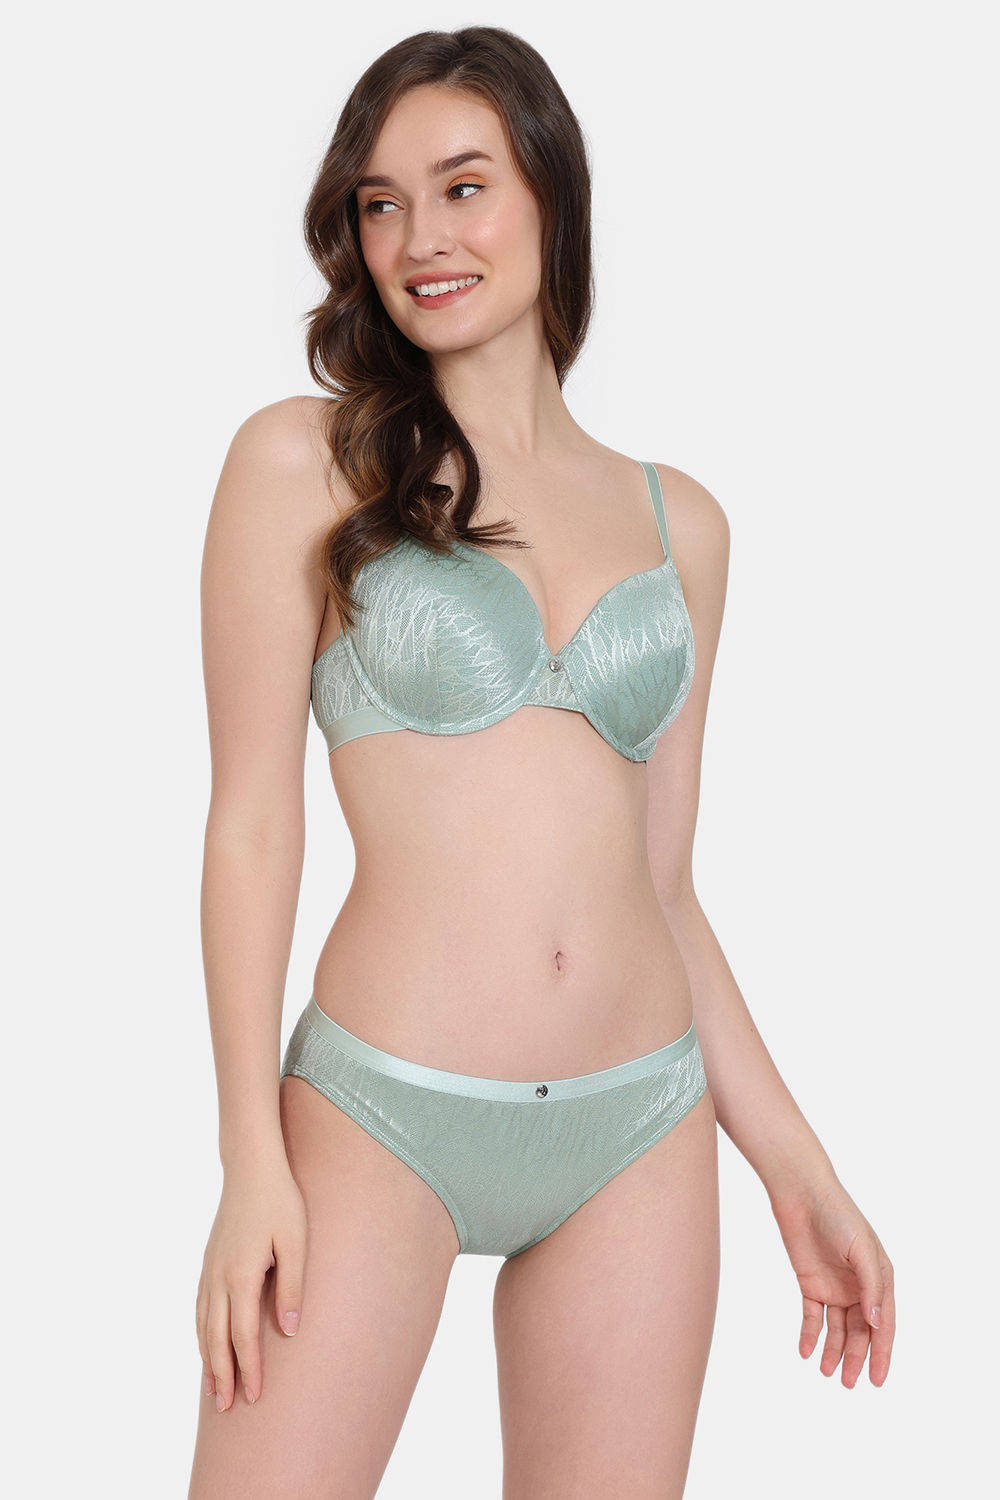 https://cdn.zivame.com/ik-seo/media/catalog/product/1/_/1_68_90/zivame-coral-glaze-padded-wired-3-4th-coverage-lace-bra-with-bikini-panty-granite-green.jpg